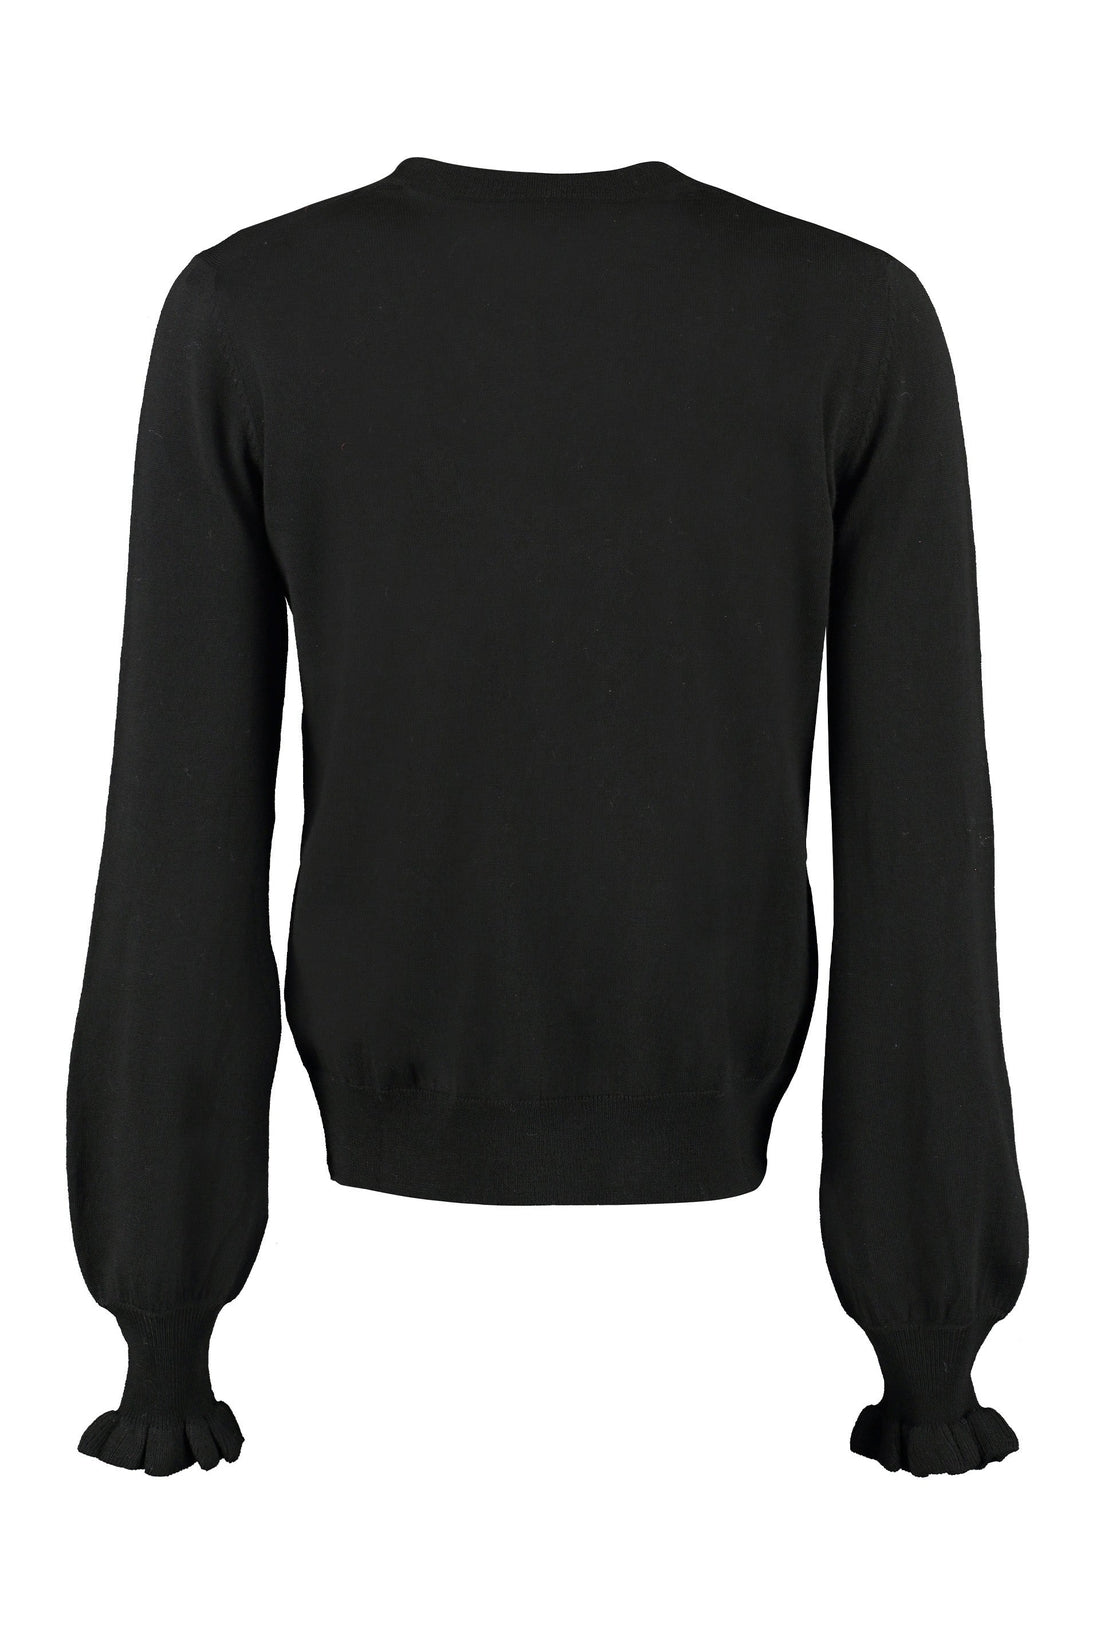 Parosh-OUTLET-SALE-Limone crew-neck wool sweater-ARCHIVIST